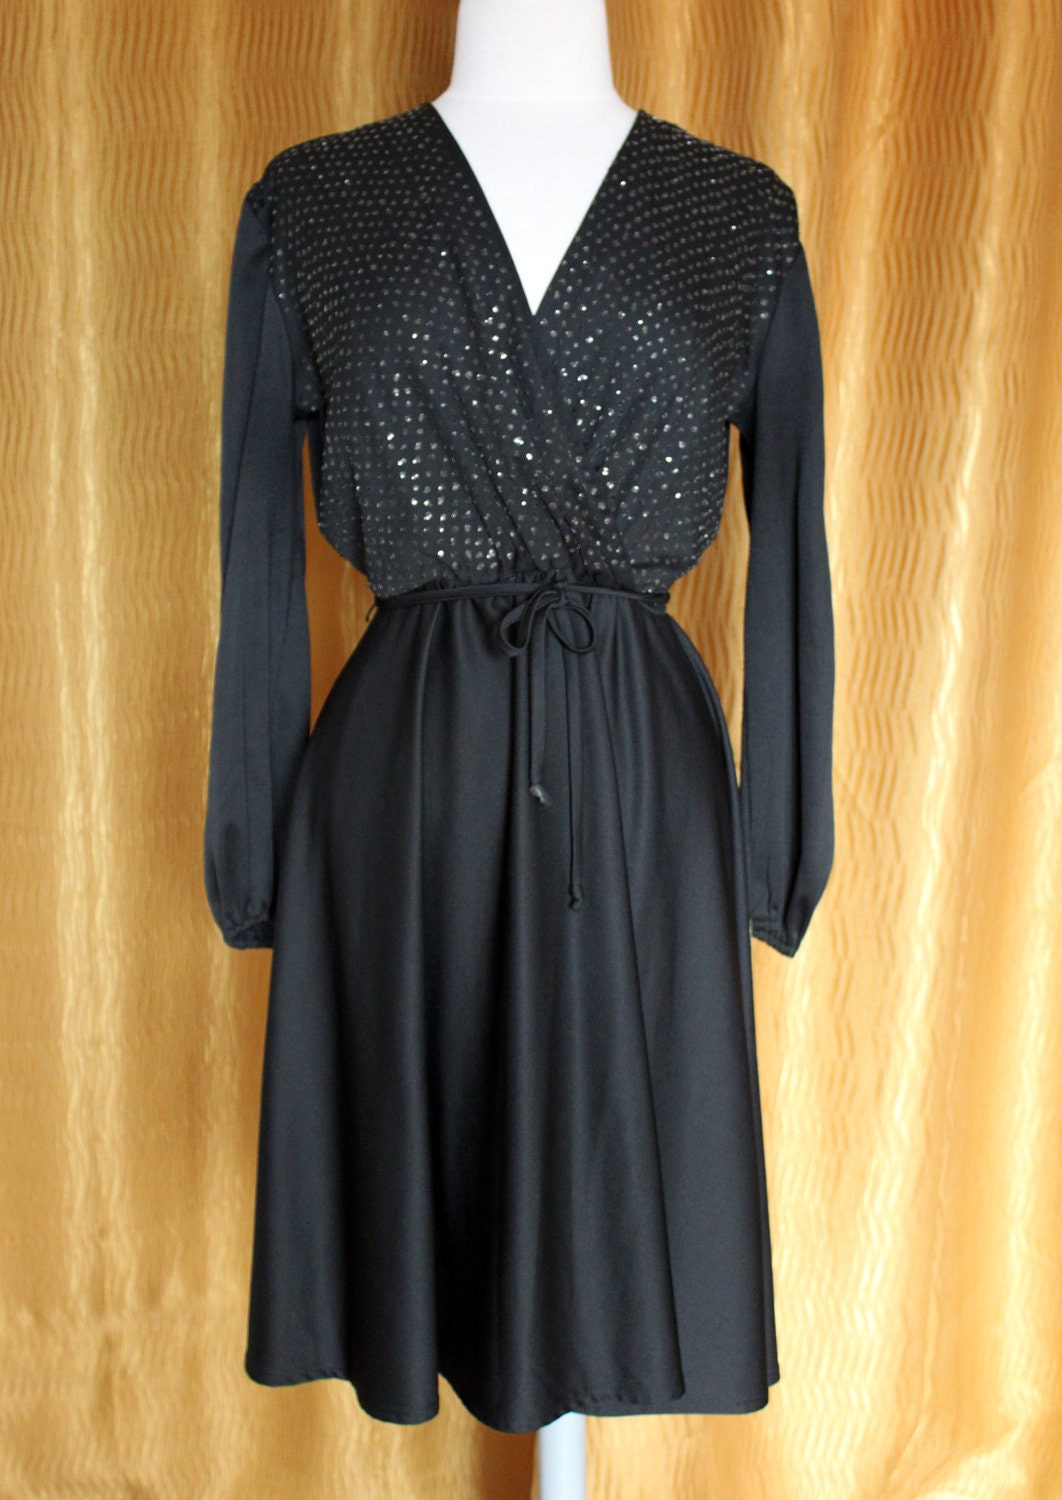 SALE - Vintage Black Sparkle Disco Dancing Dress